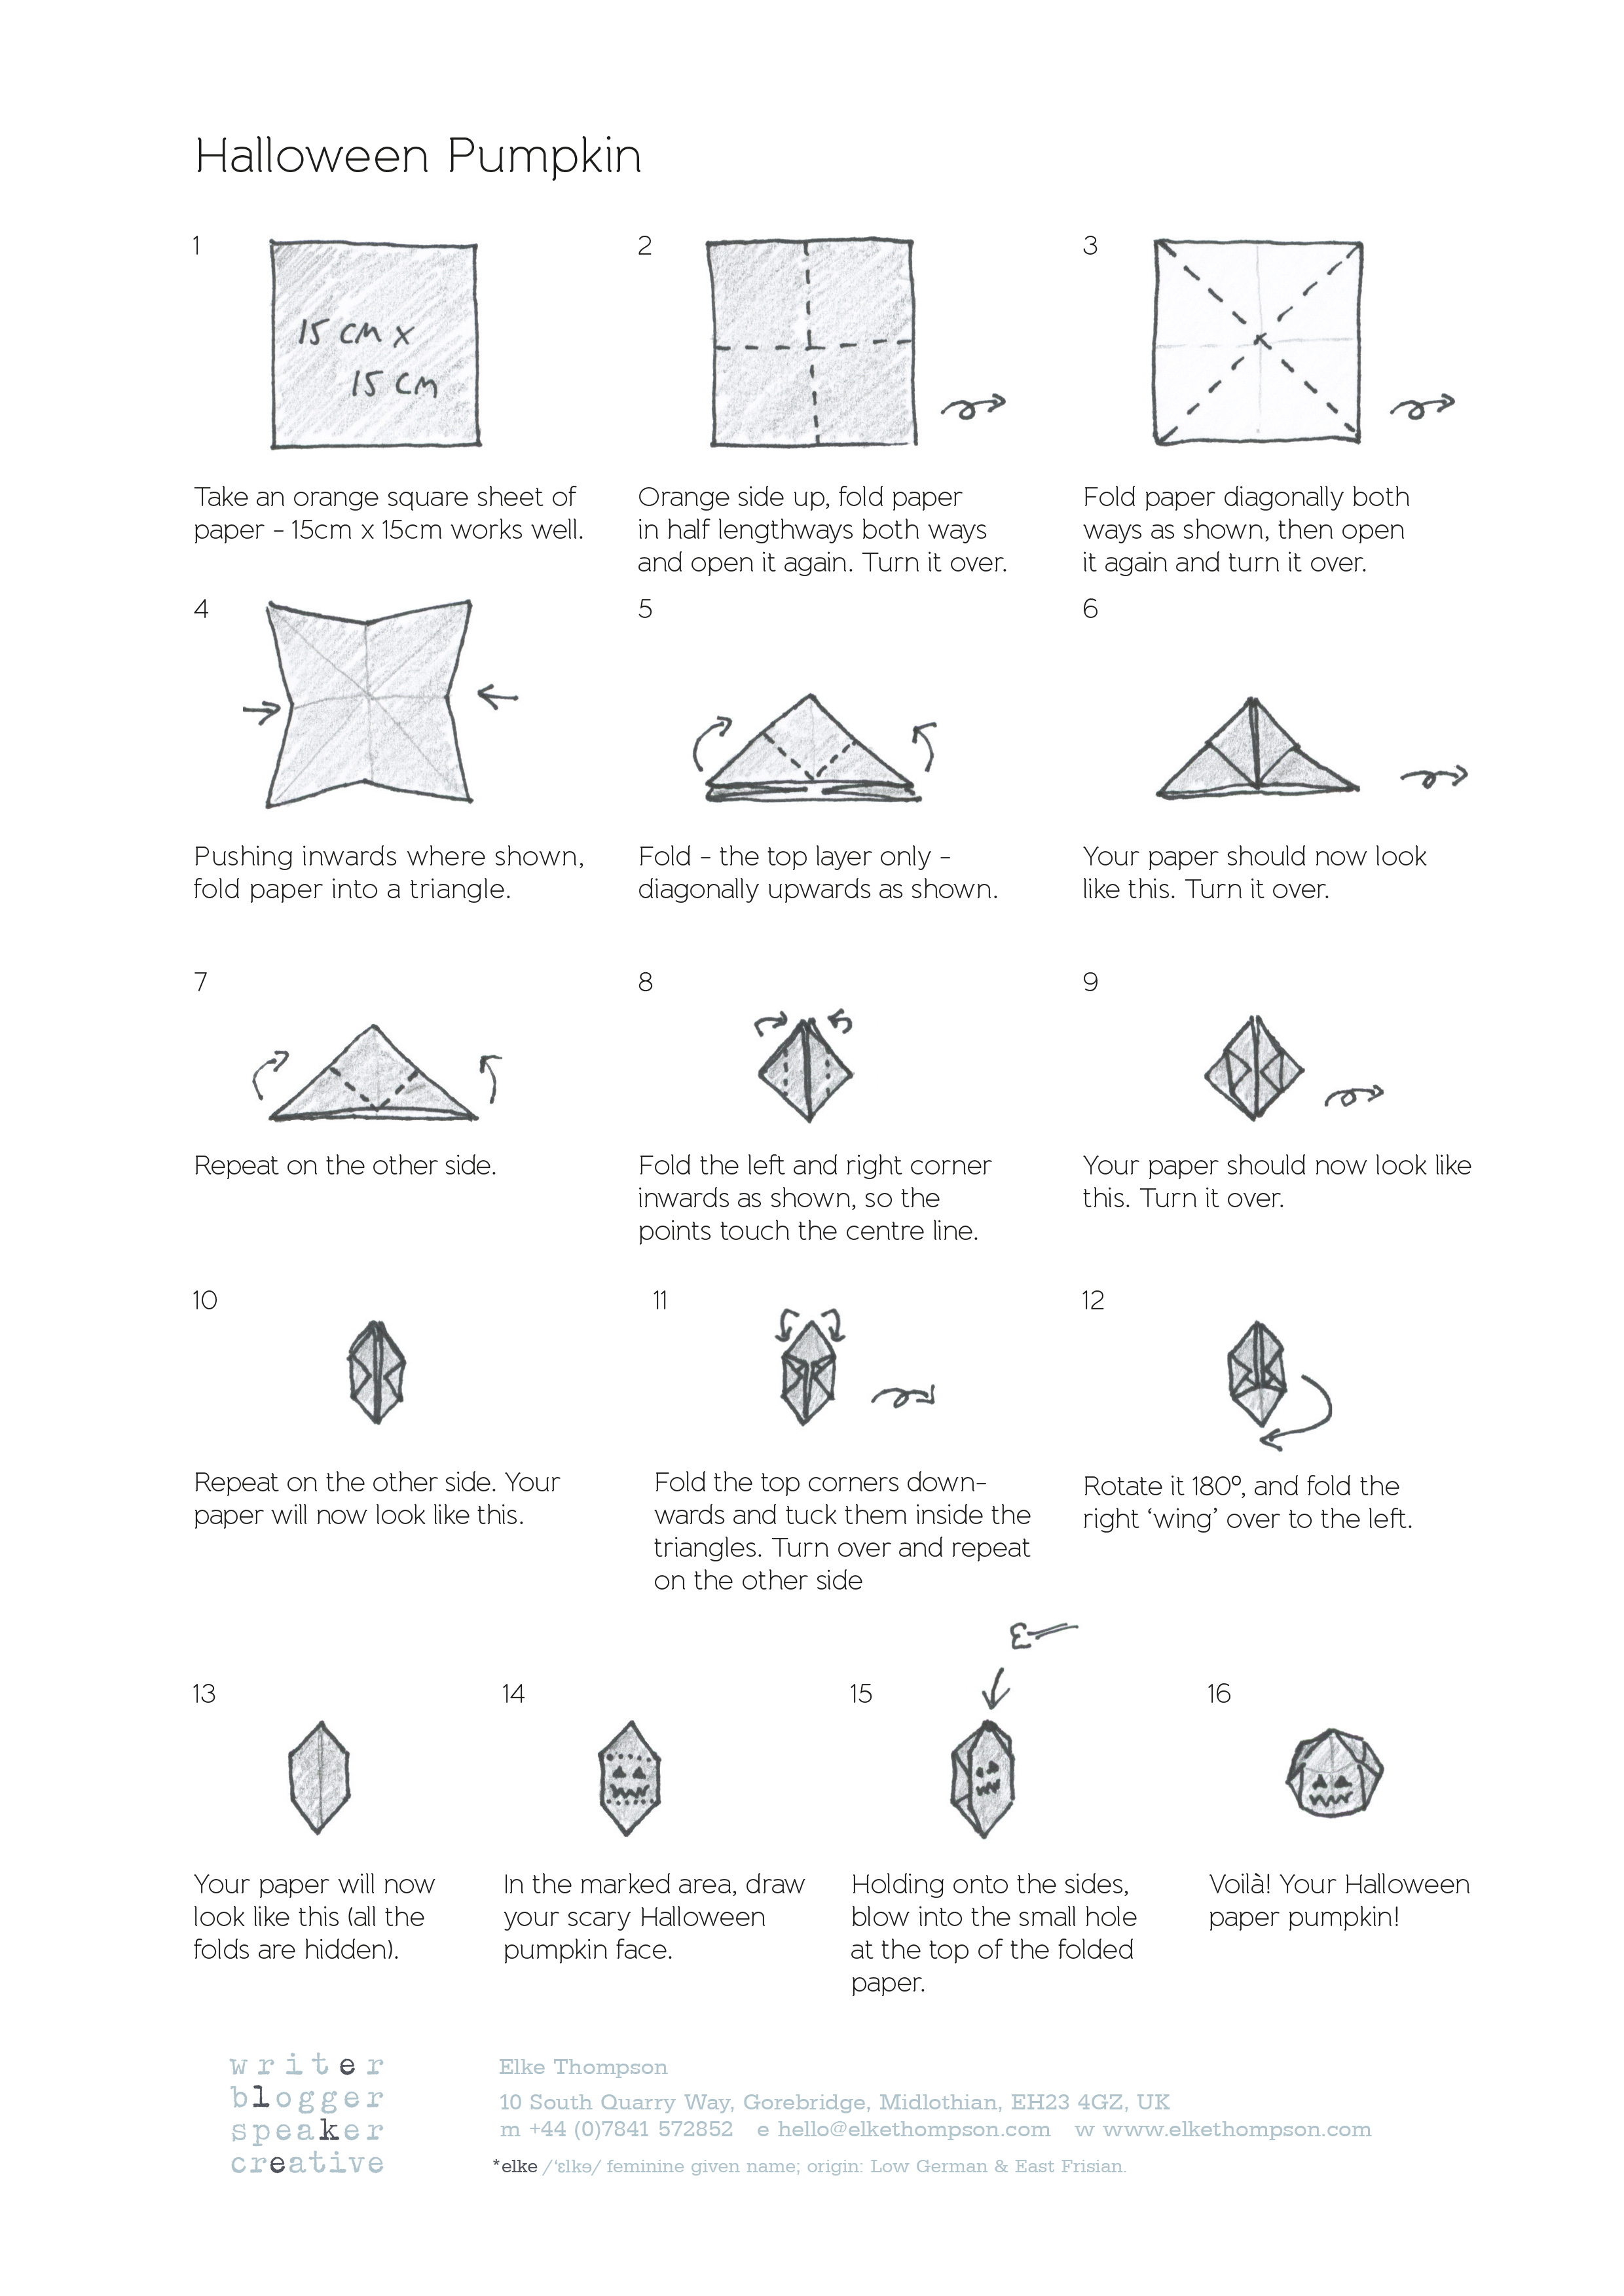 Halloween origami pumpkin fun with folding instructions... Elke Thompson